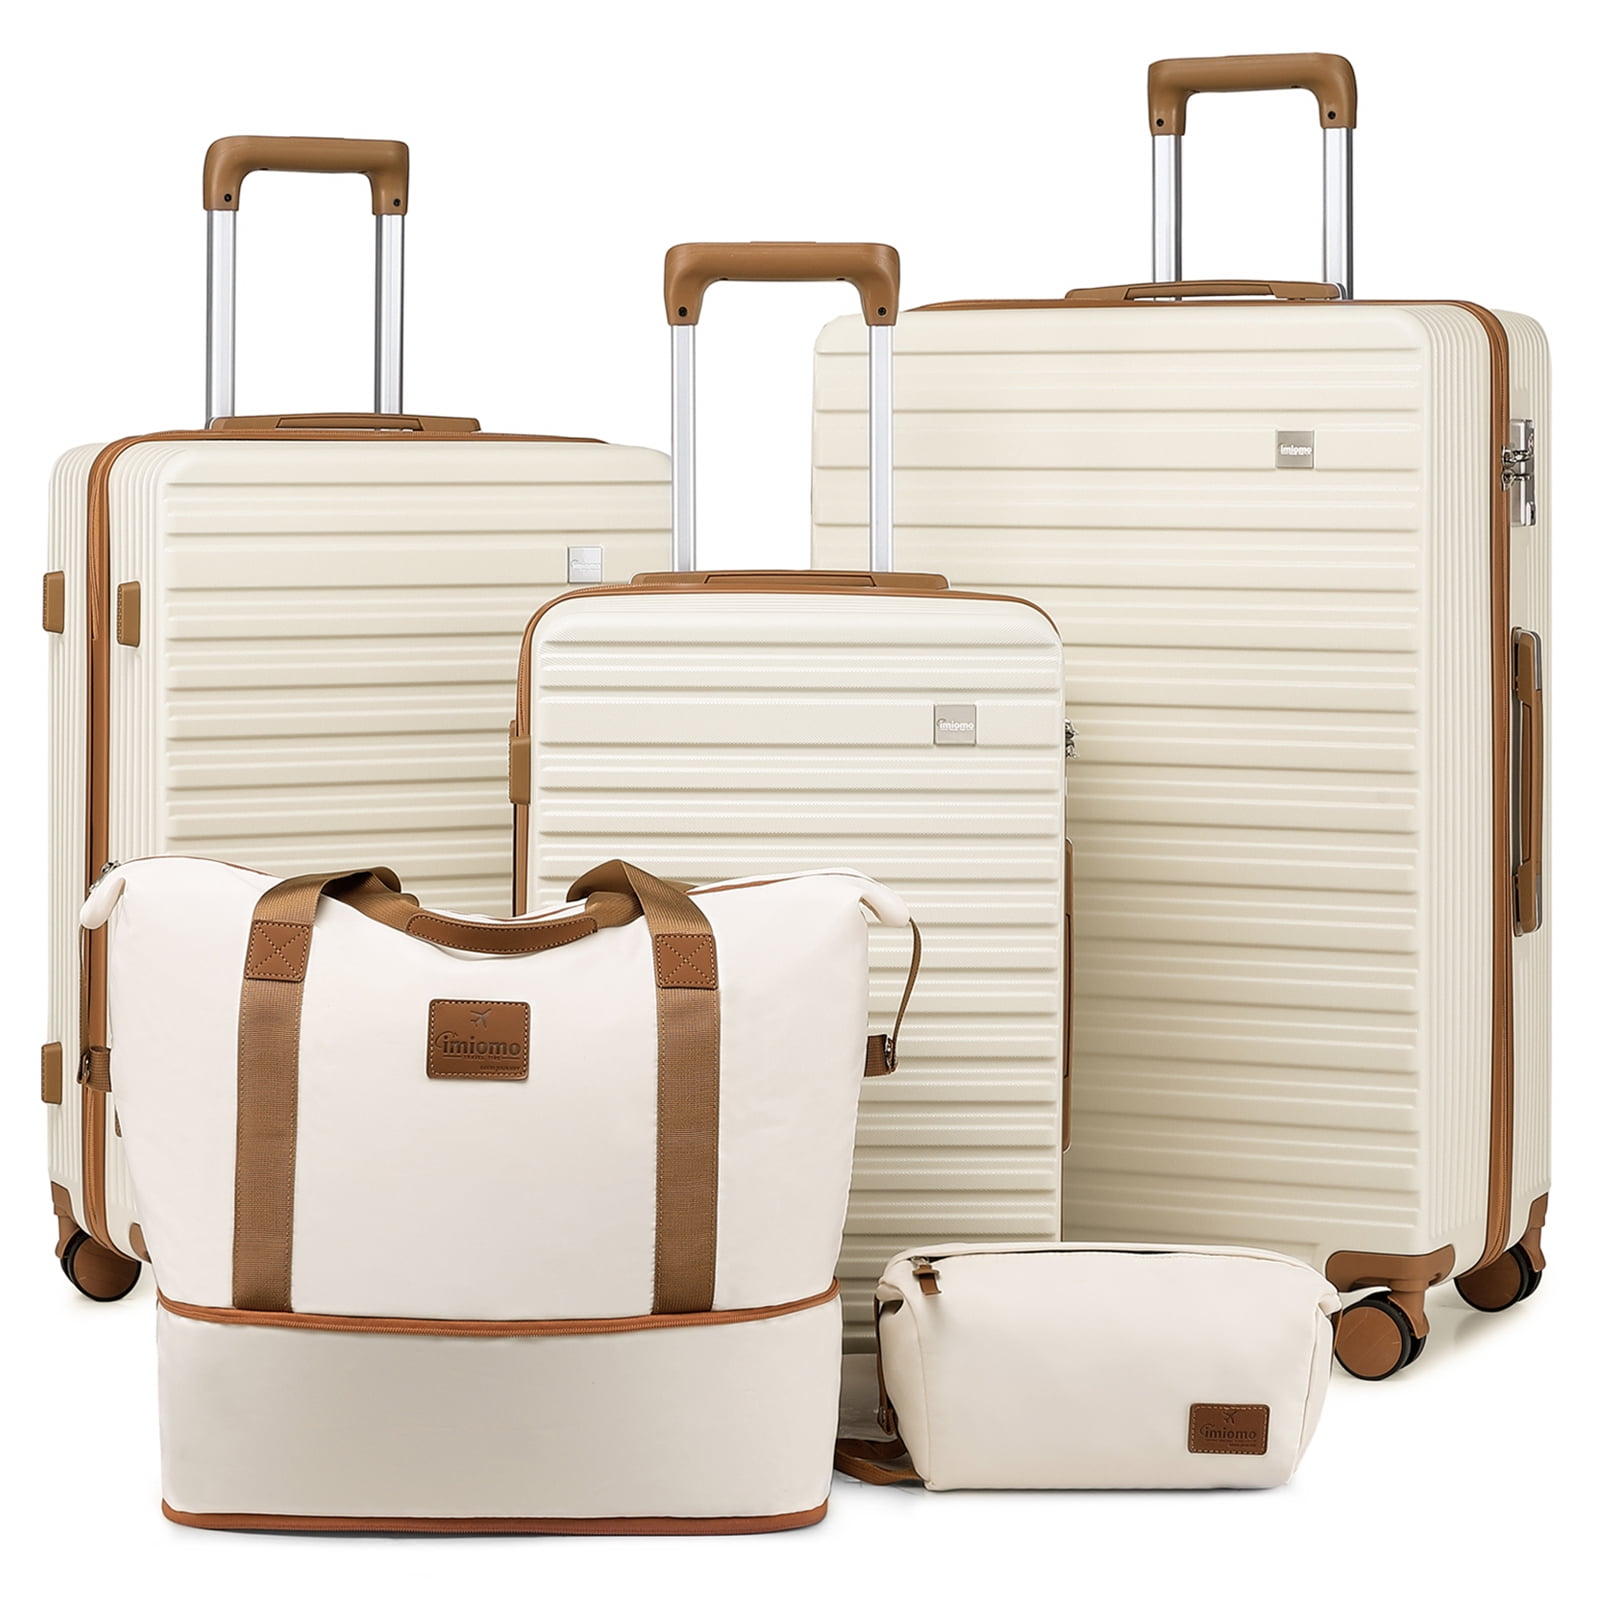 imiomo 3-Piece Luggage Hard Shell Lightweight Luggage Set with TSA Lock ...